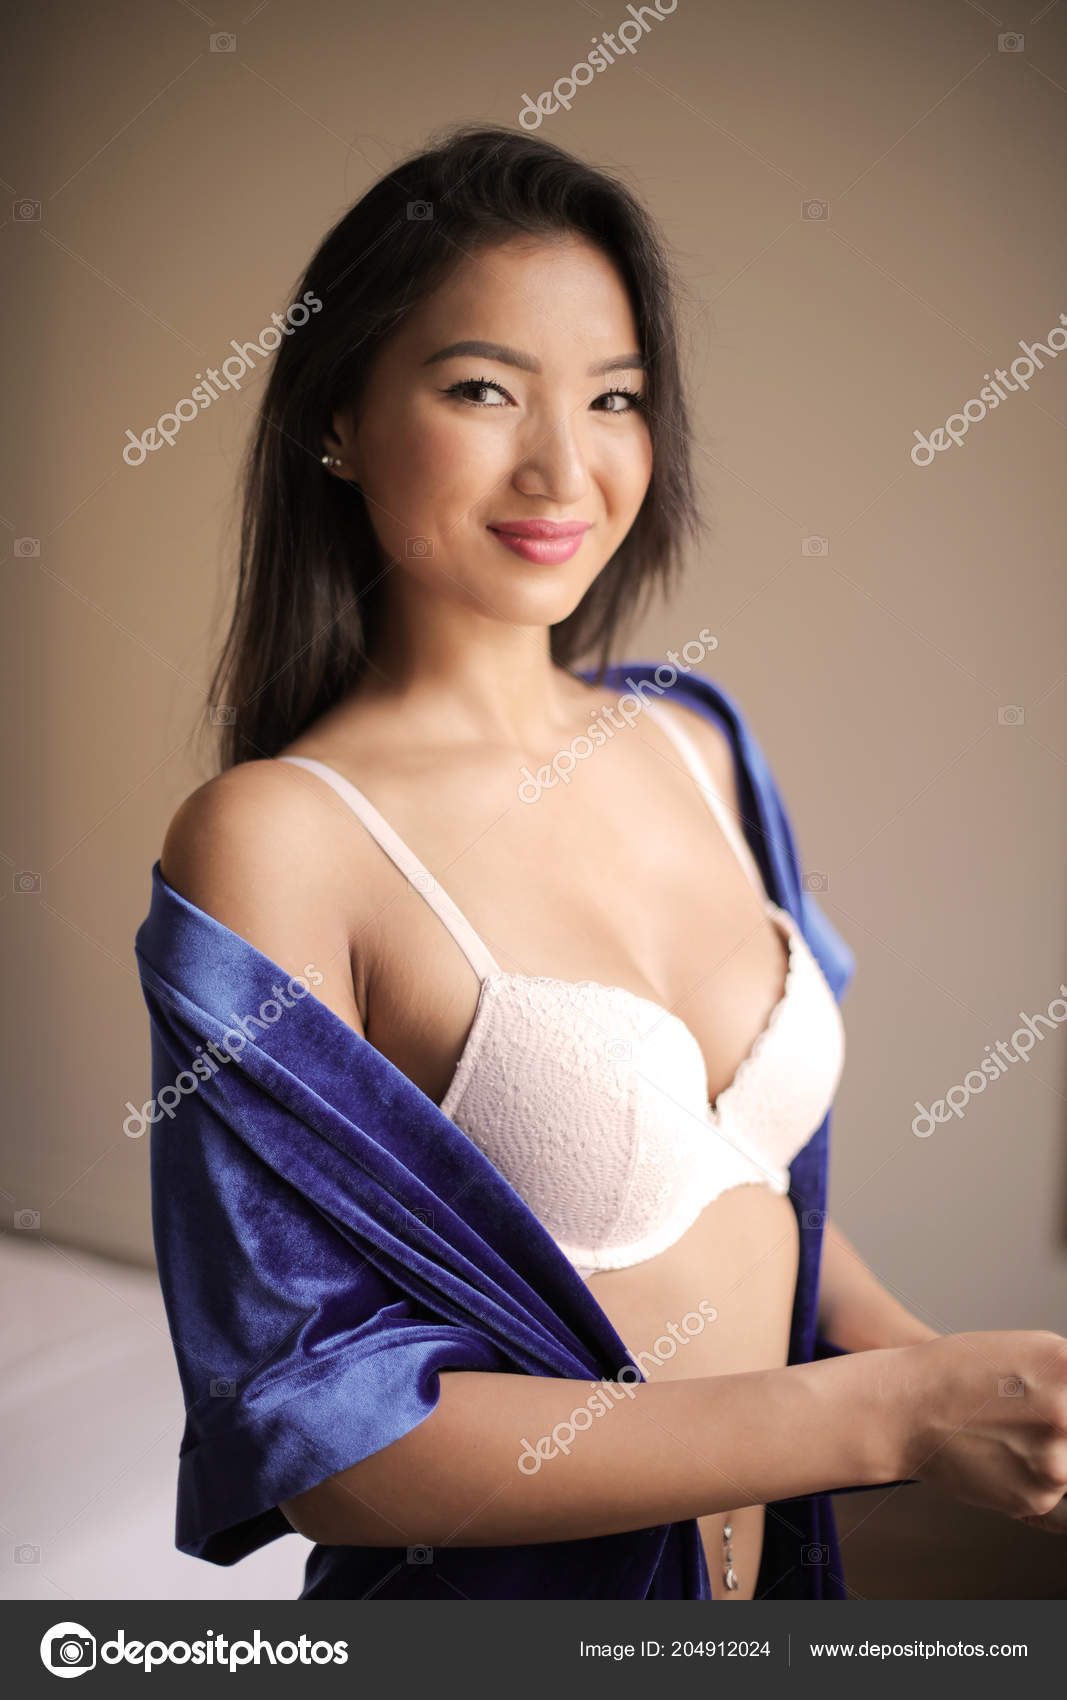 https://st4.depositphotos.com/1008939/20491/i/1600/depositphotos_204912024-stock-photo-elegant-asian-woman-lingerie.jpg